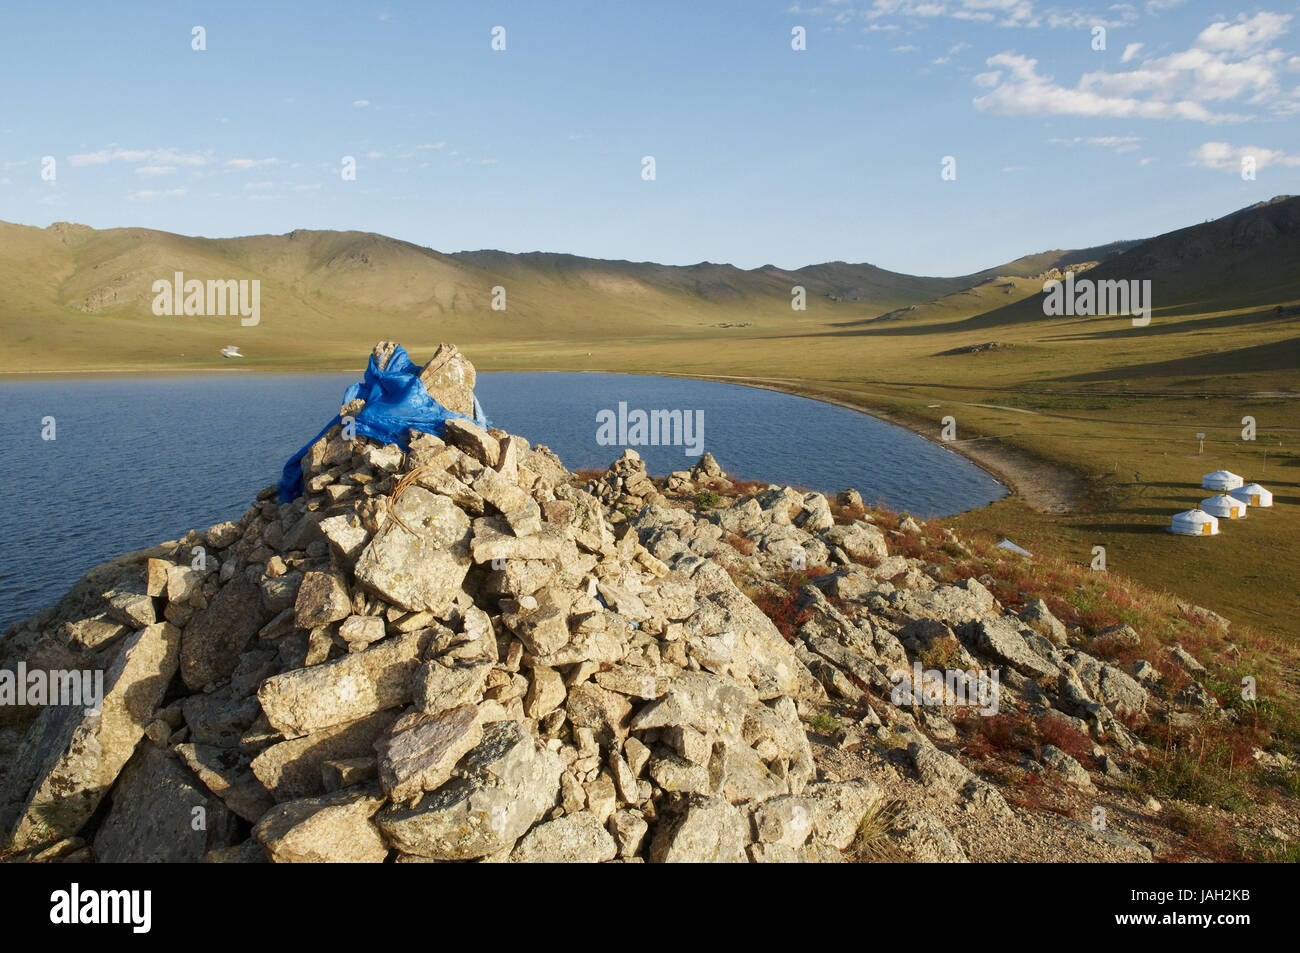 Mongolia,Asia centrale,Khorgo parco nazionale,lago Terkhiin Tsagaan,Ovoo,tumulo buddista,Khatag,tradizionale saluto sciarpa, Foto Stock